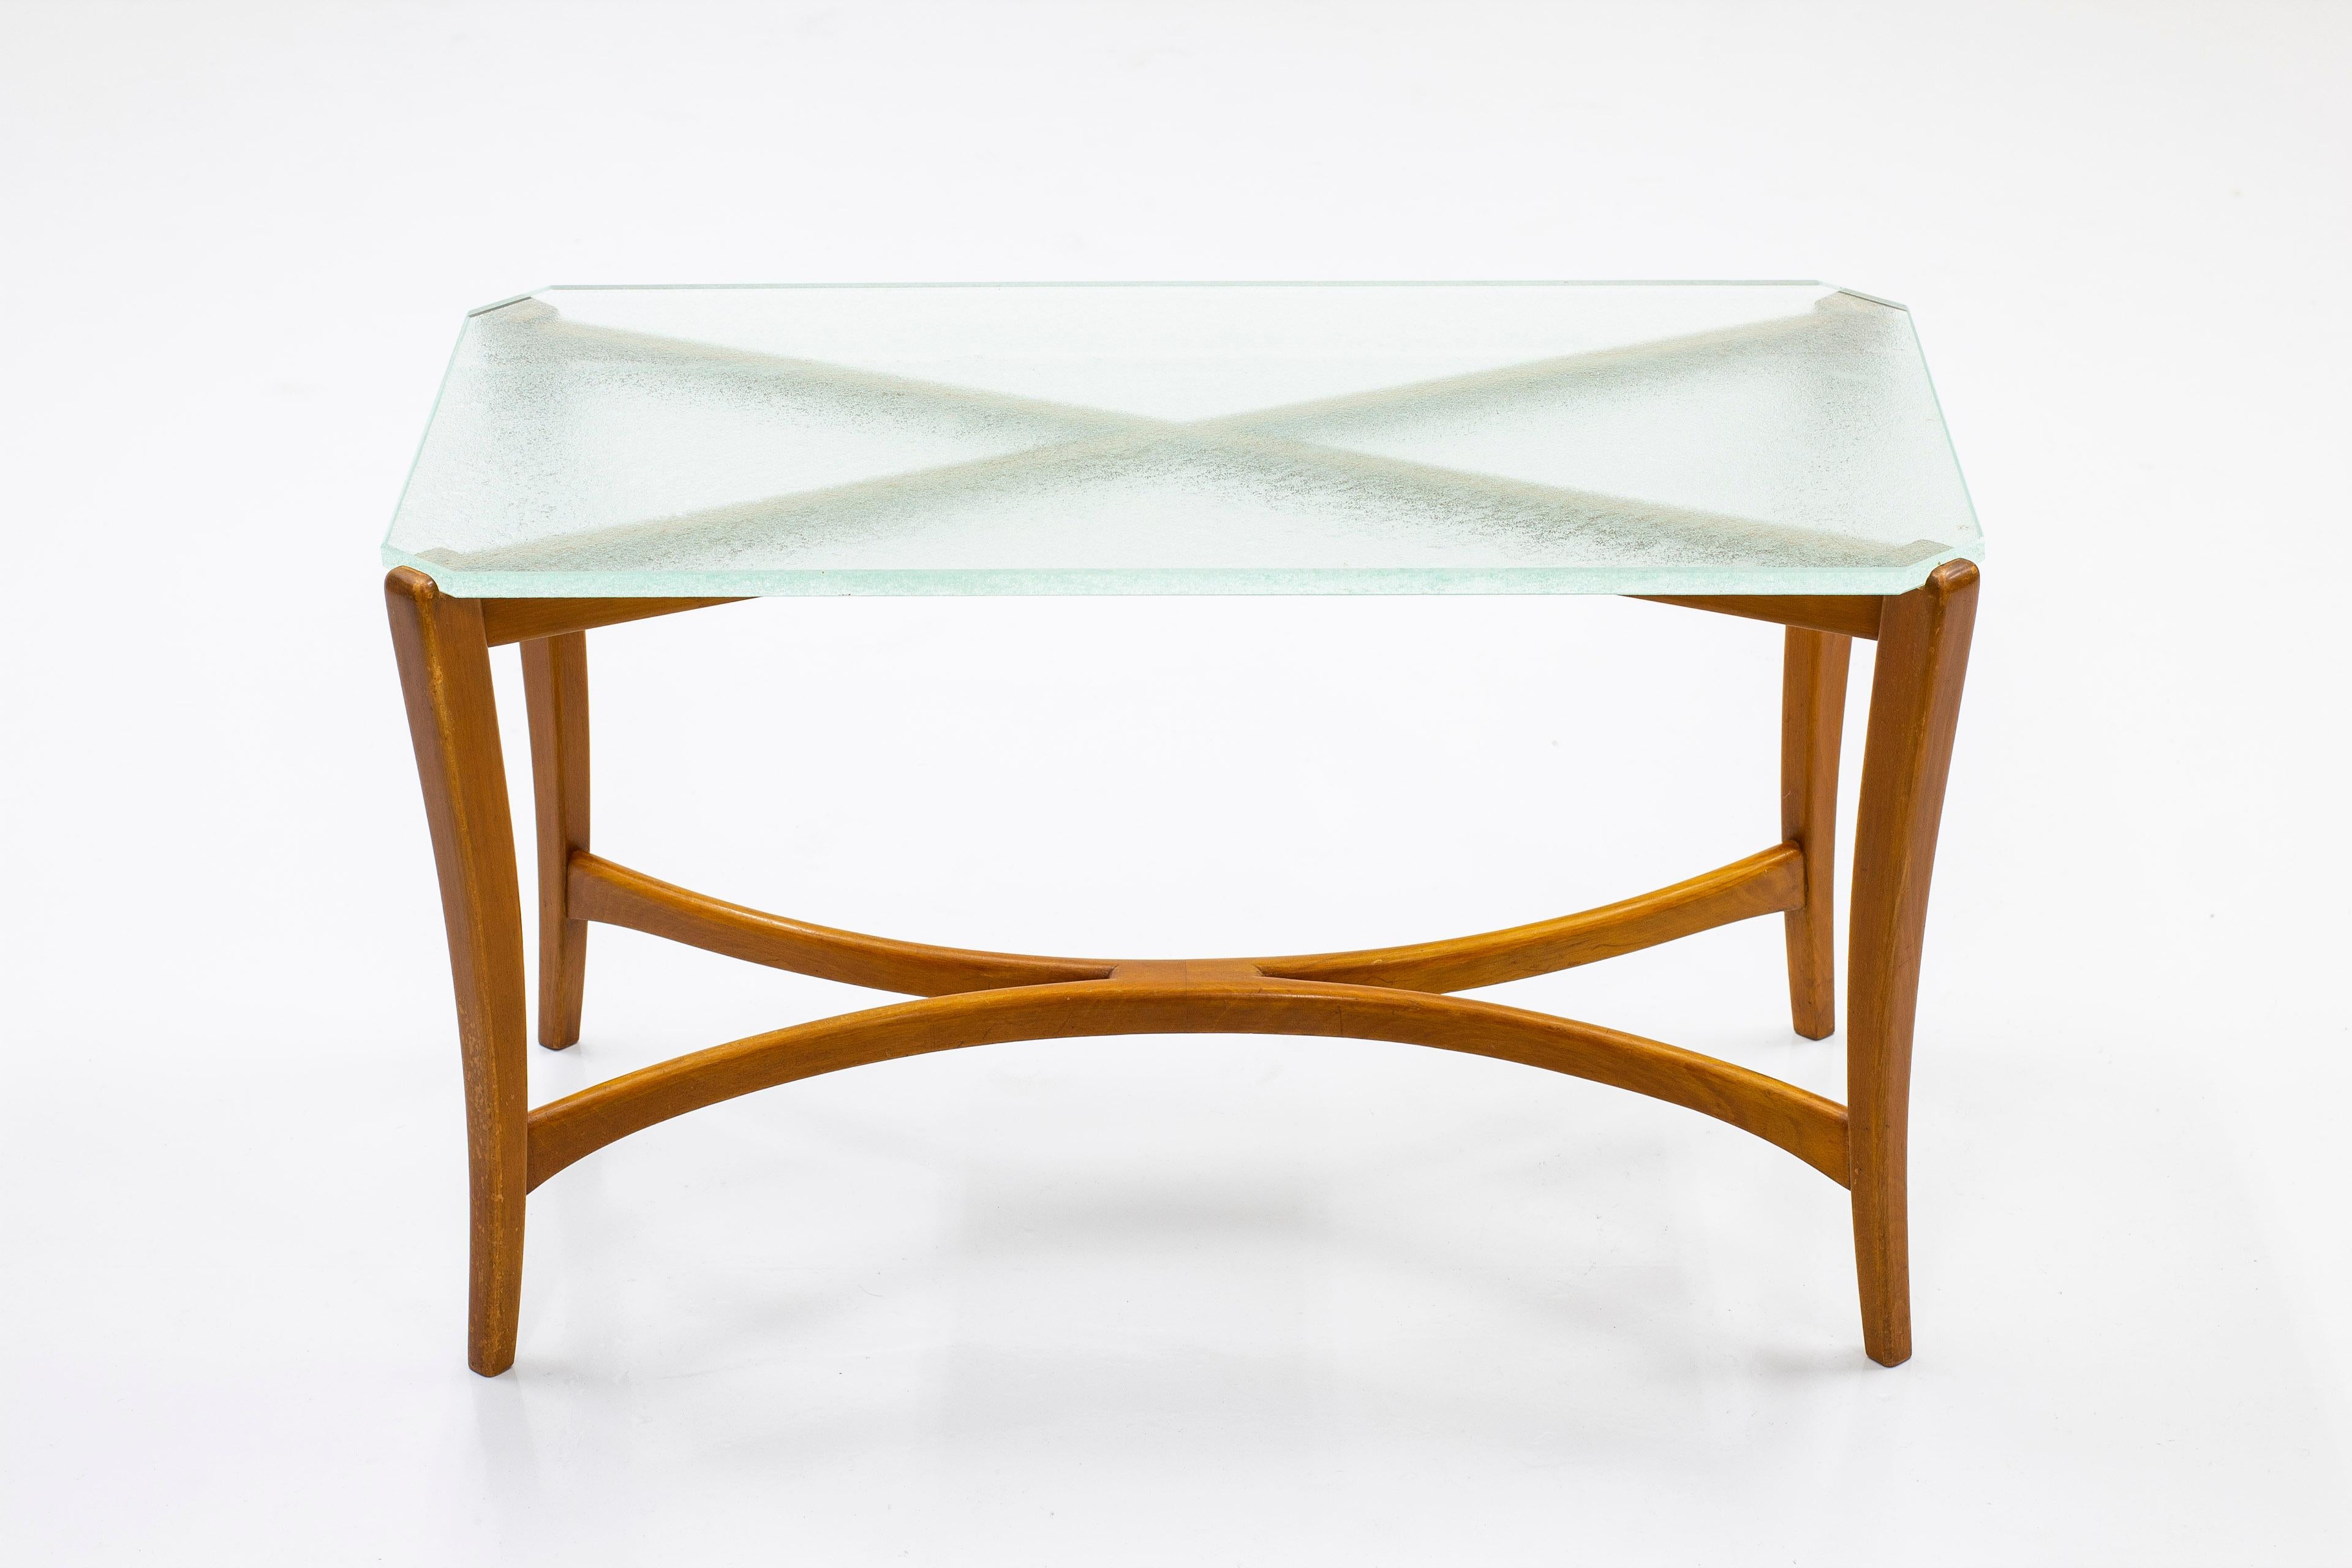 Swedish Modern Wood and Glass Sofa Table by Nordiska Kompaniet, Sweden, 1939 For Sale 6